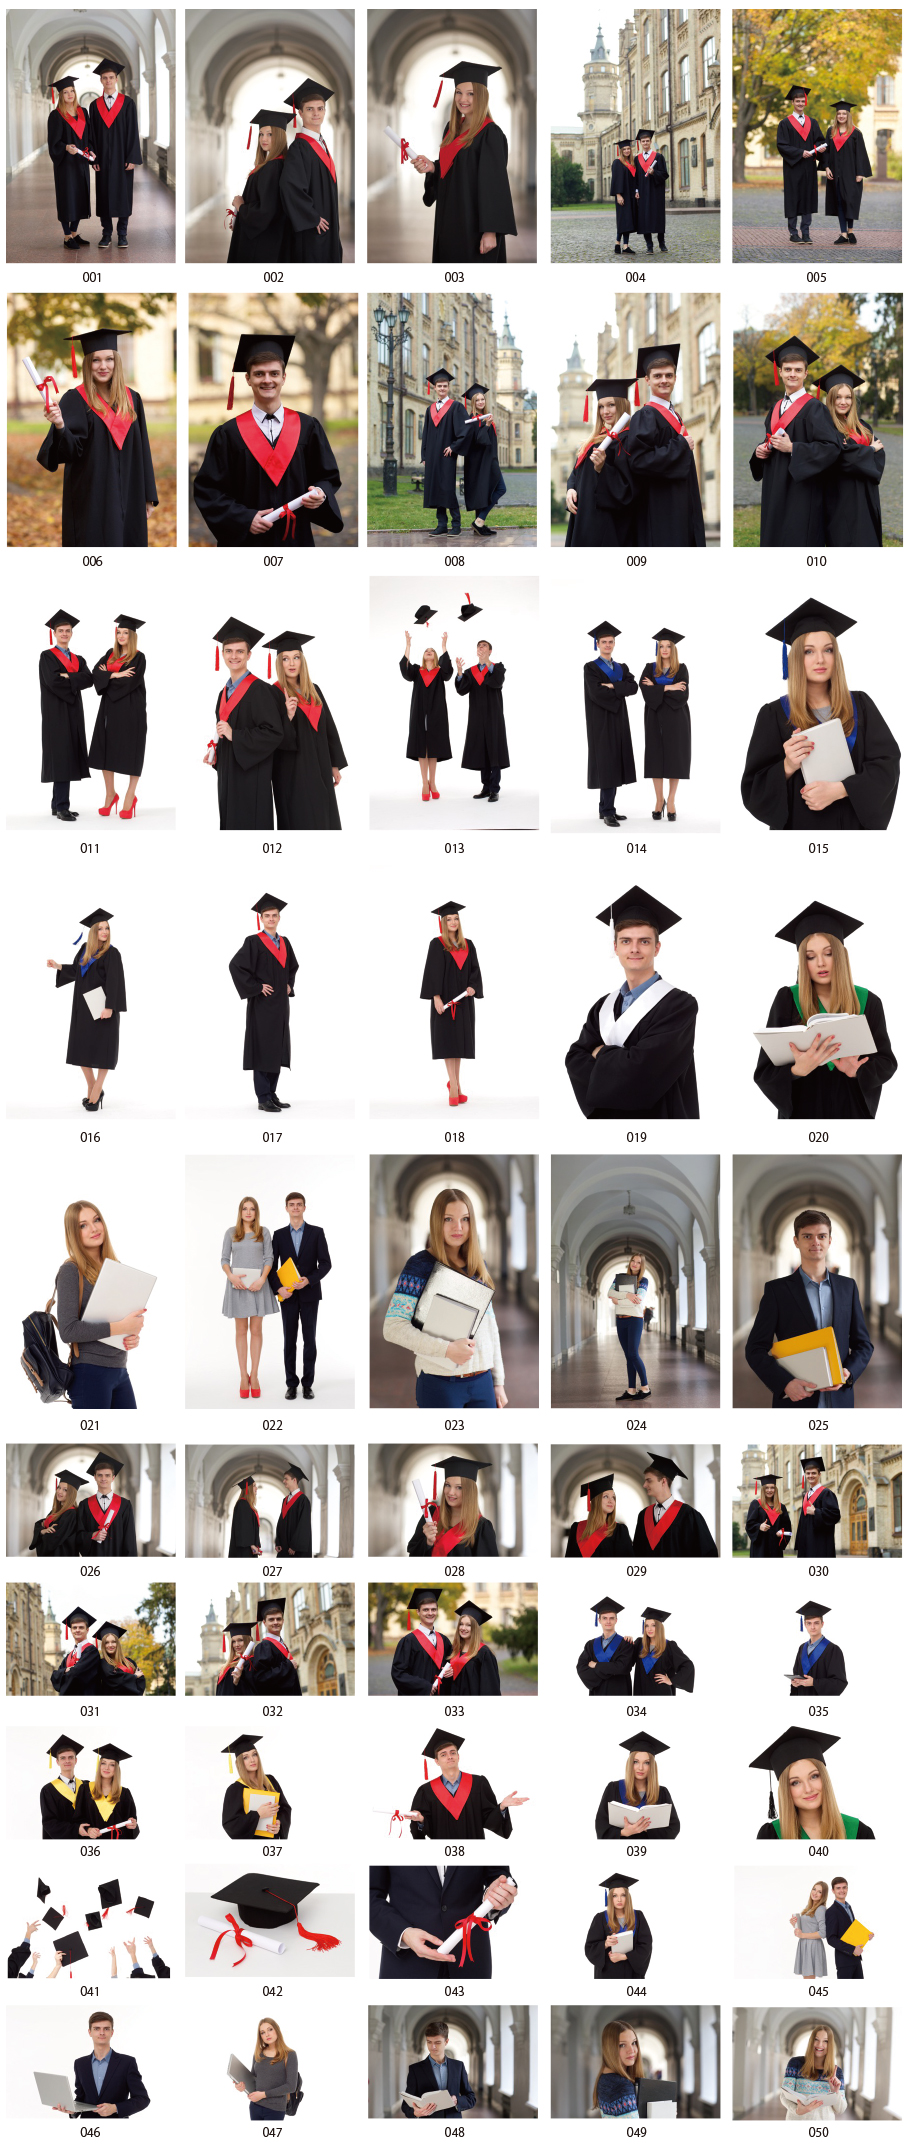 University student photos